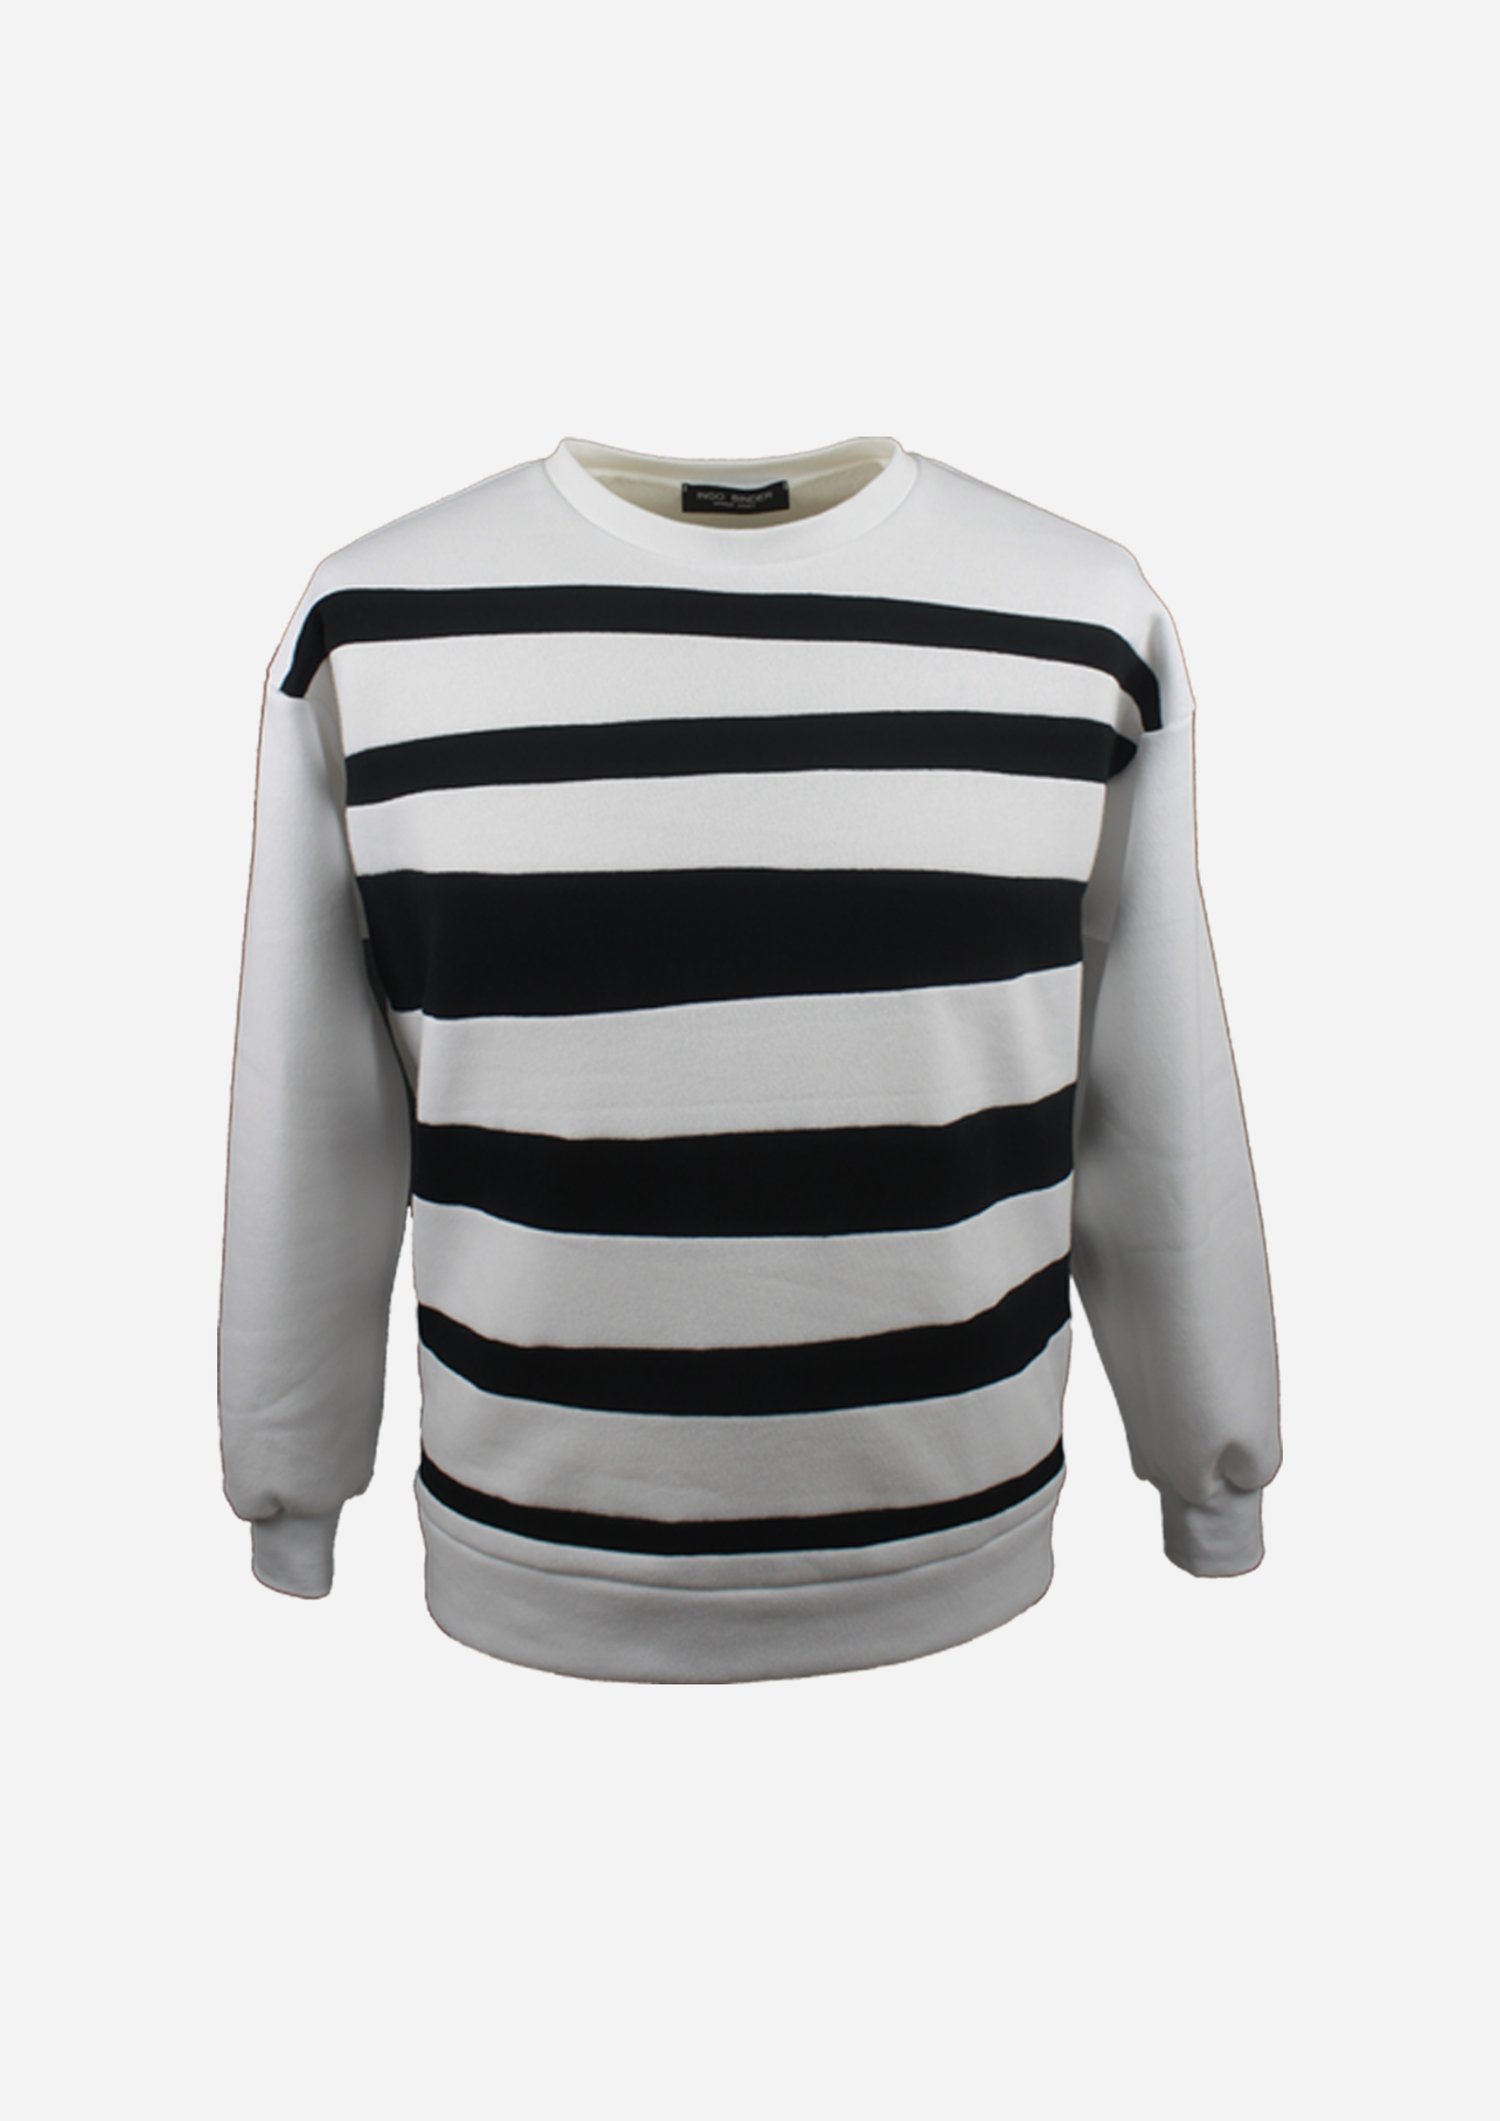 THE Sweater asymmetric, black striped